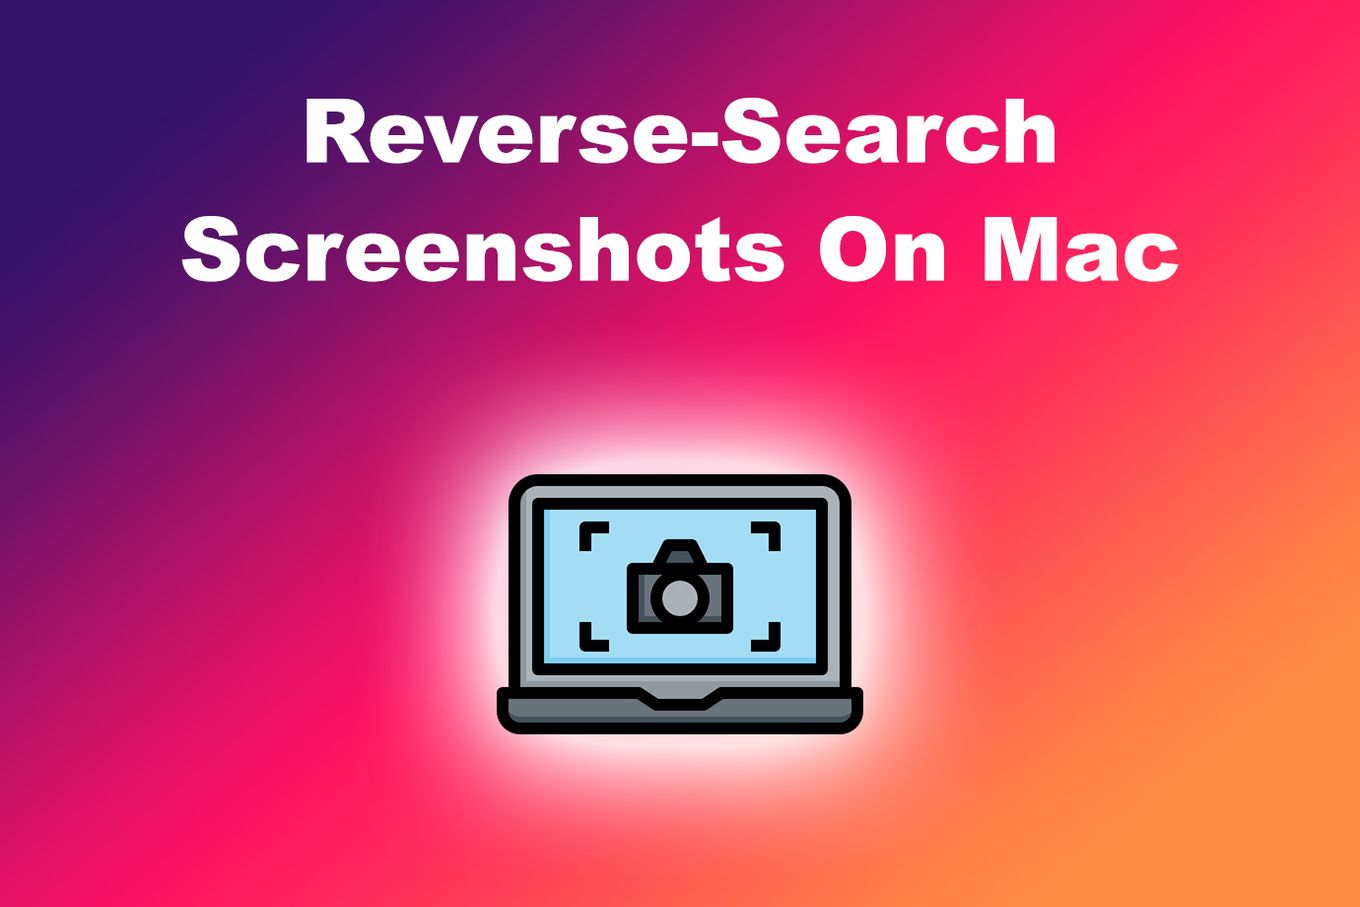 Reverse-Search Screenshots on Mac